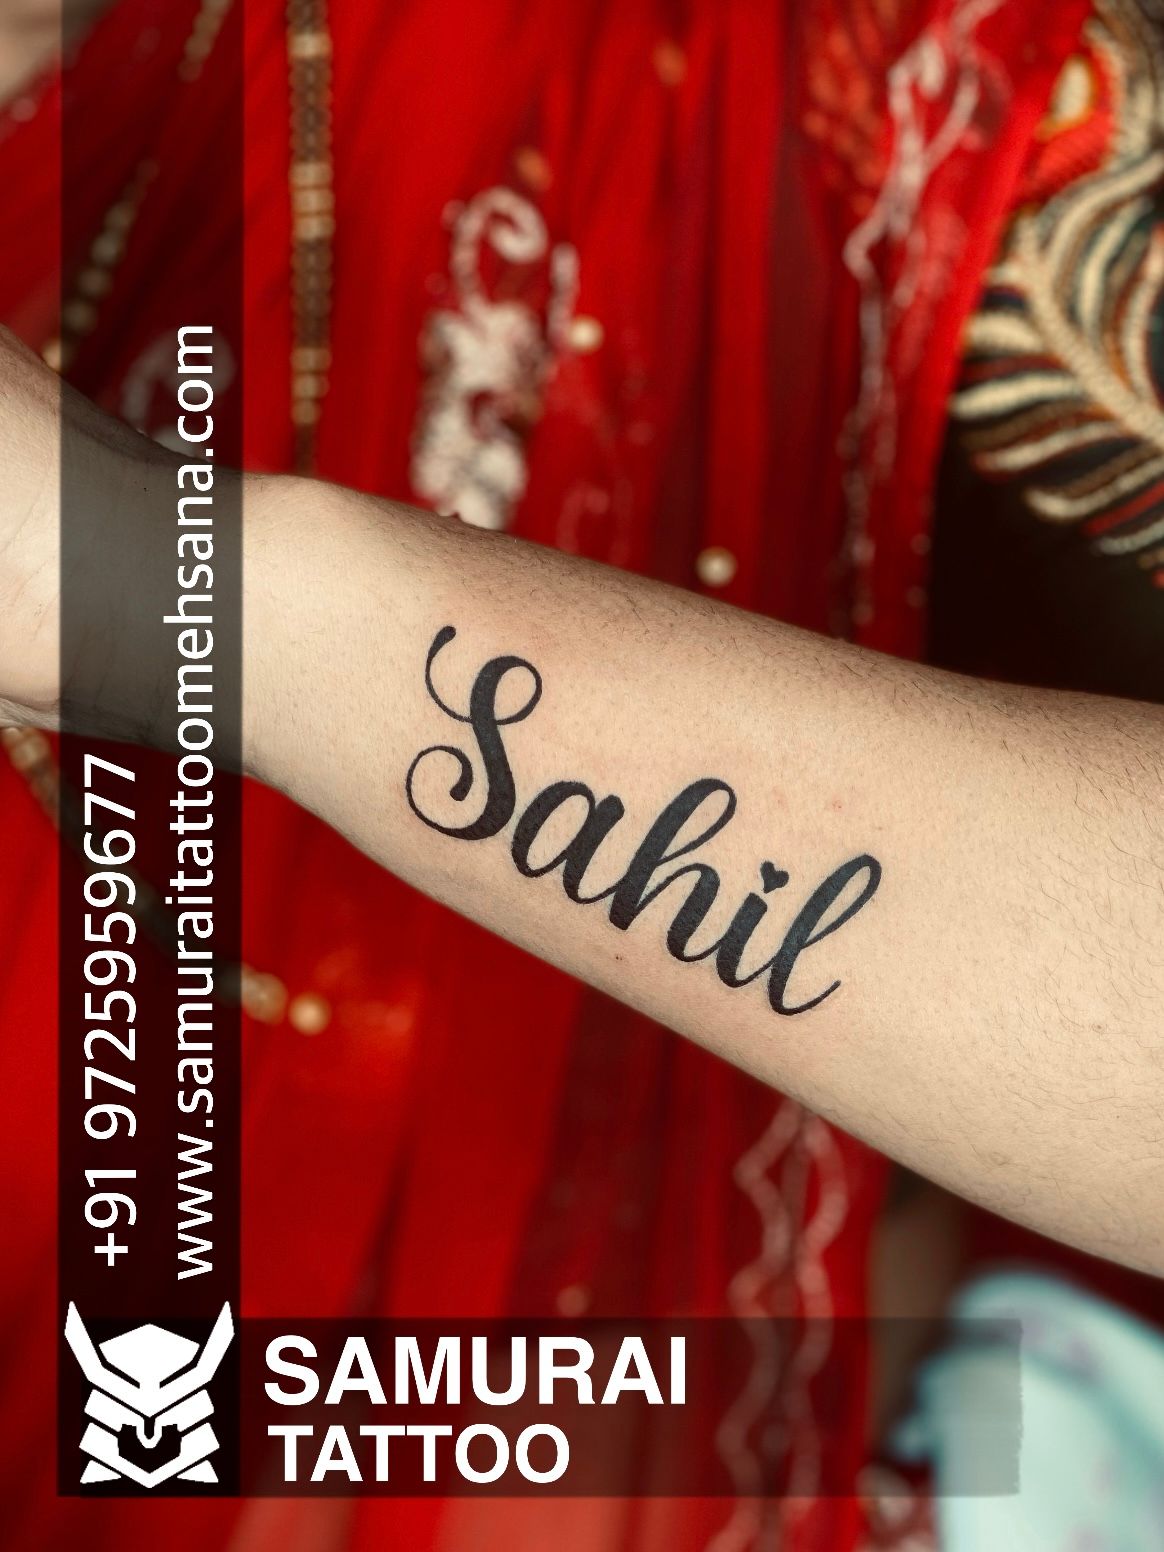 Urdu name Tattoo work done ✓ @mandair_tattooz More info m.70097-34236  #nametag #urdu #moretattoo #réel #tattoogirl #boy #india #punja... |  Instagram